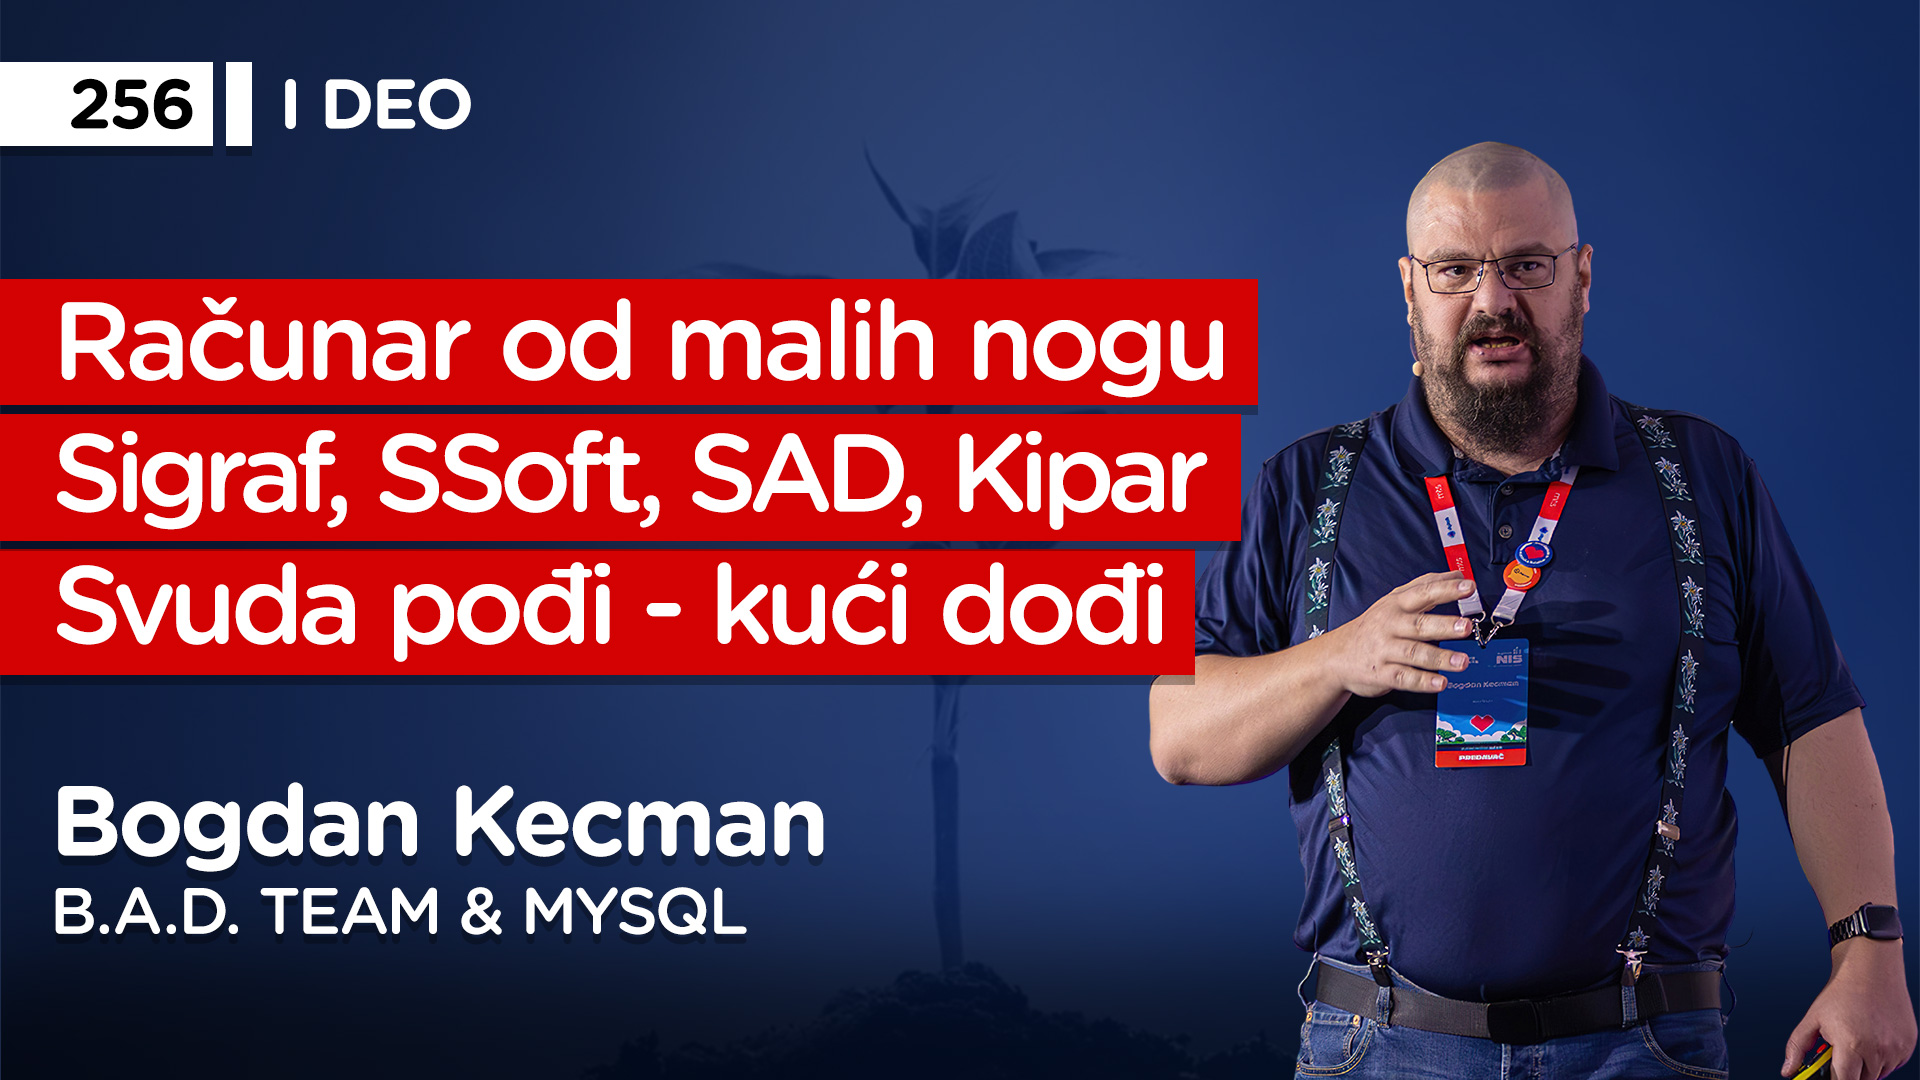 EP256: Bogdan Kecman